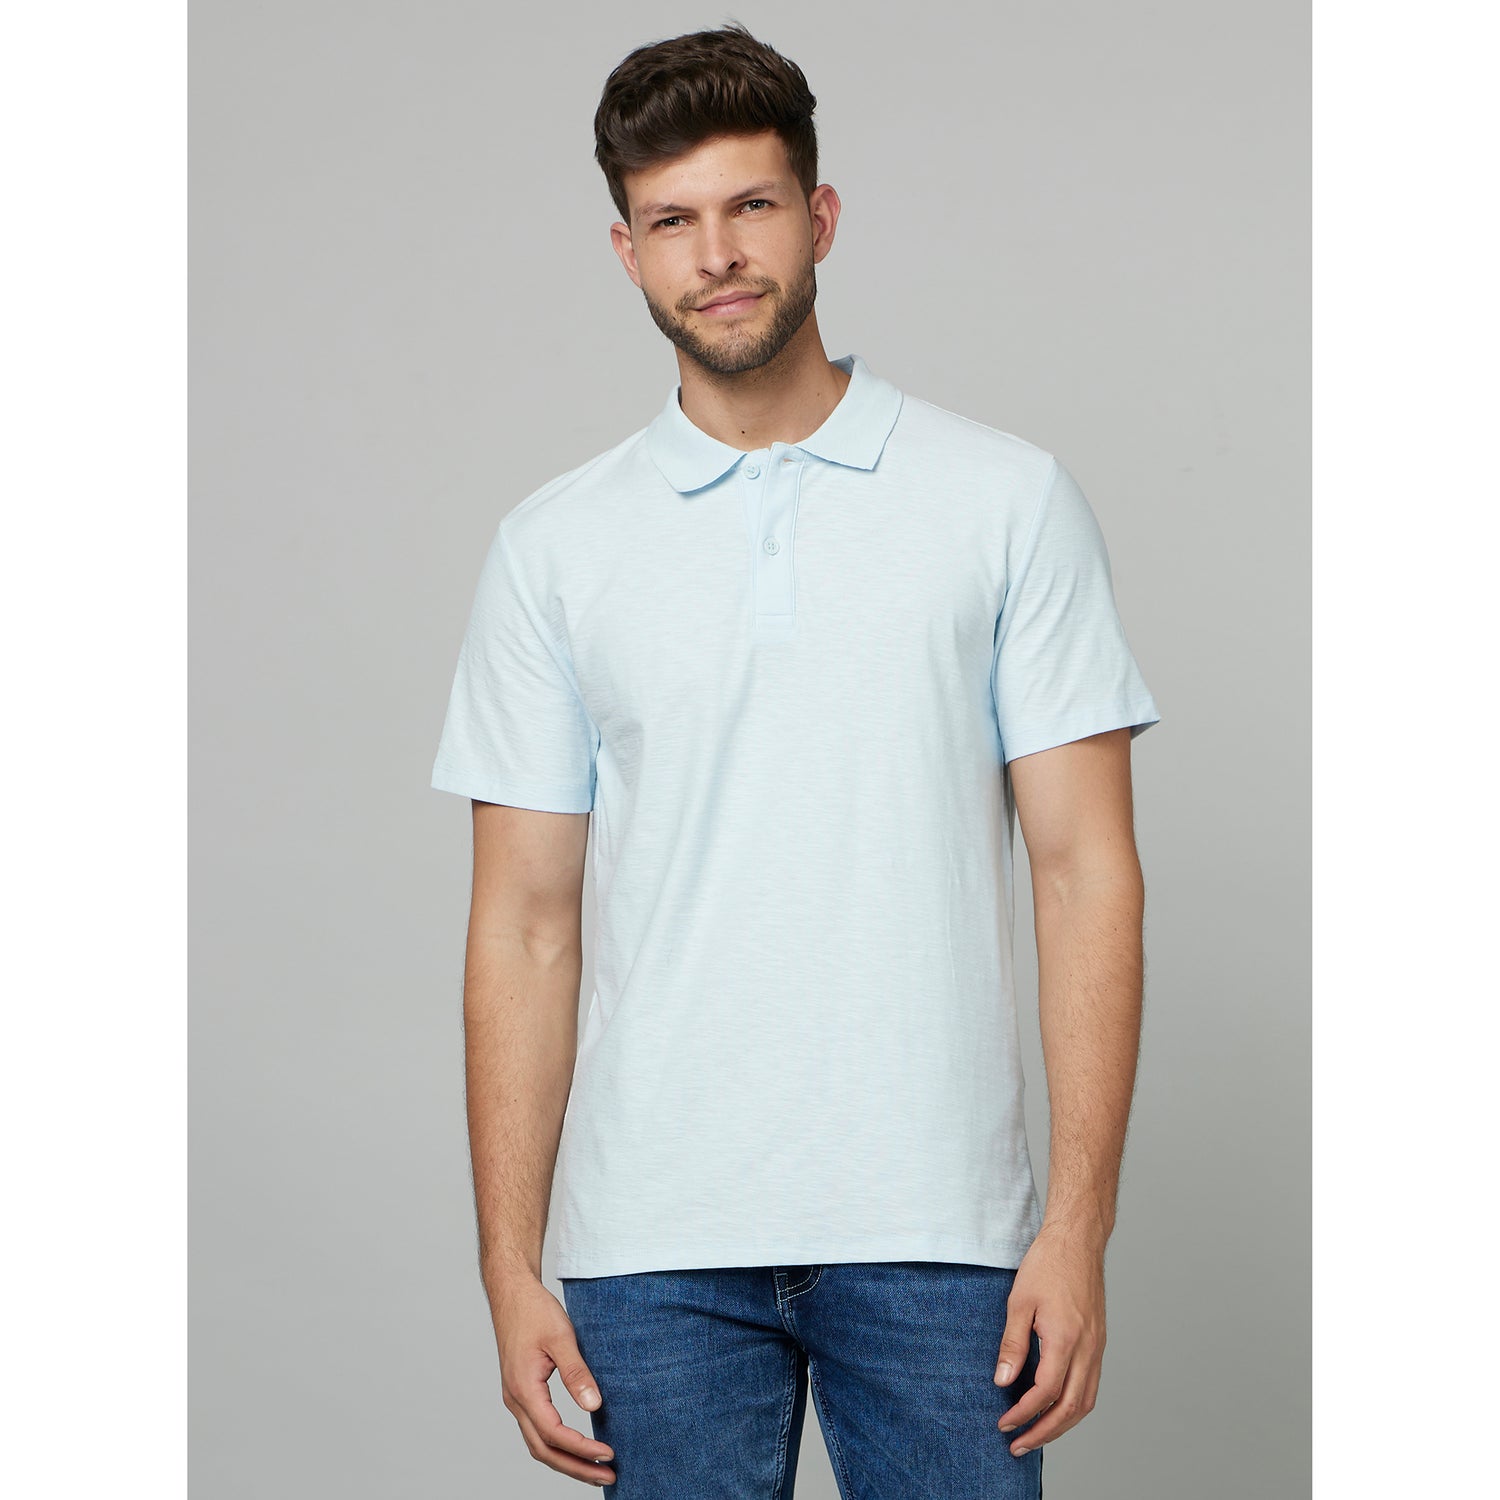 Light Blue Polo Collar Cotton Casual T-Shirt (FEFLAME)